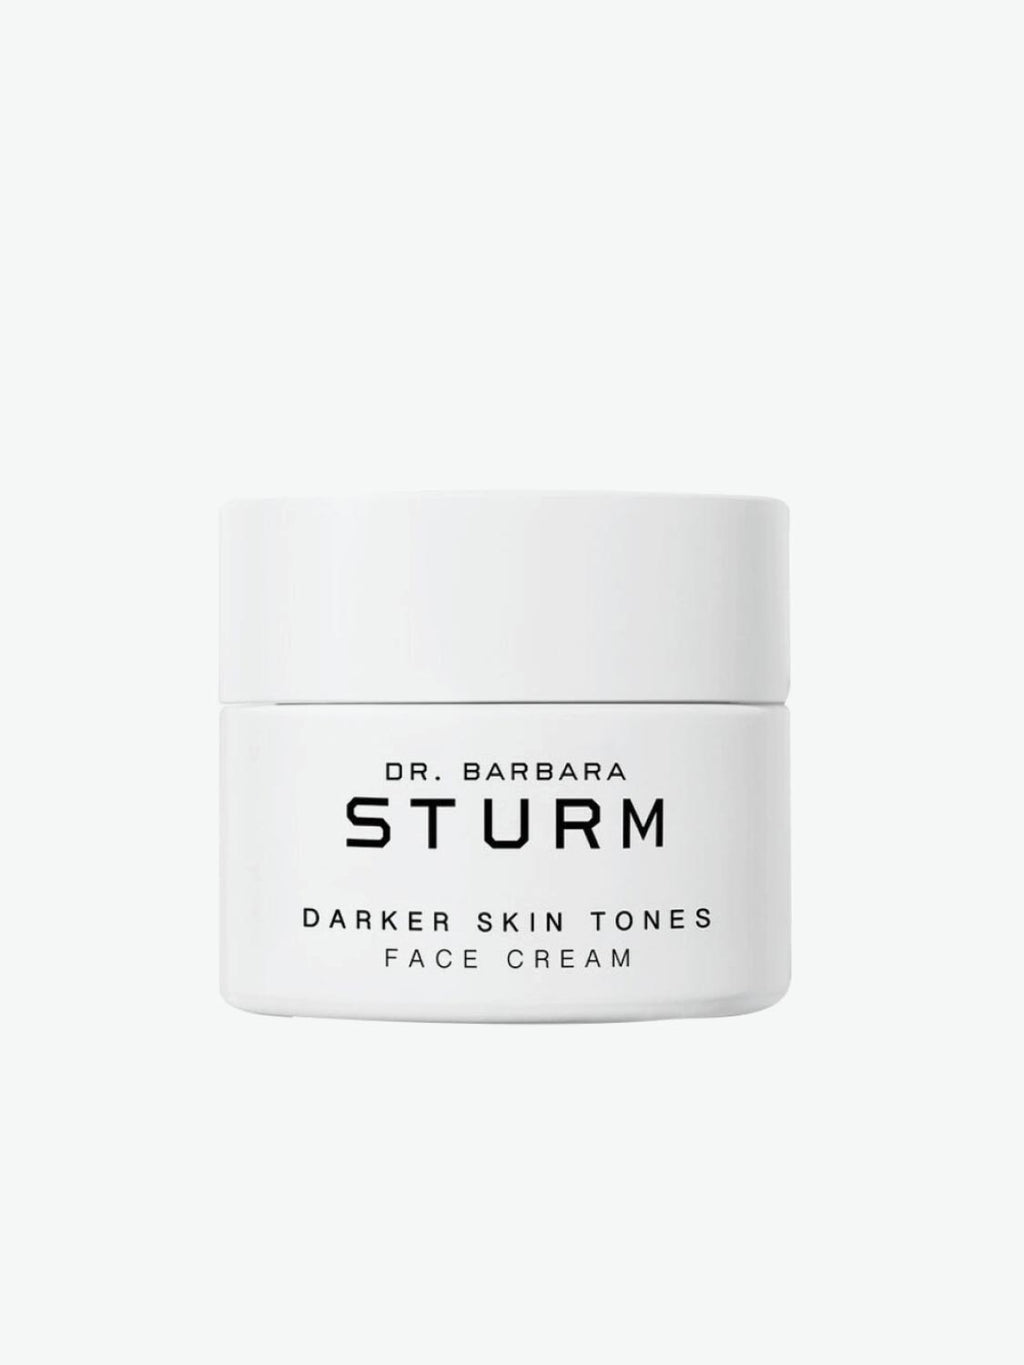 Dr. Barbara Sturm Darker Skin Tones Face Cream | A